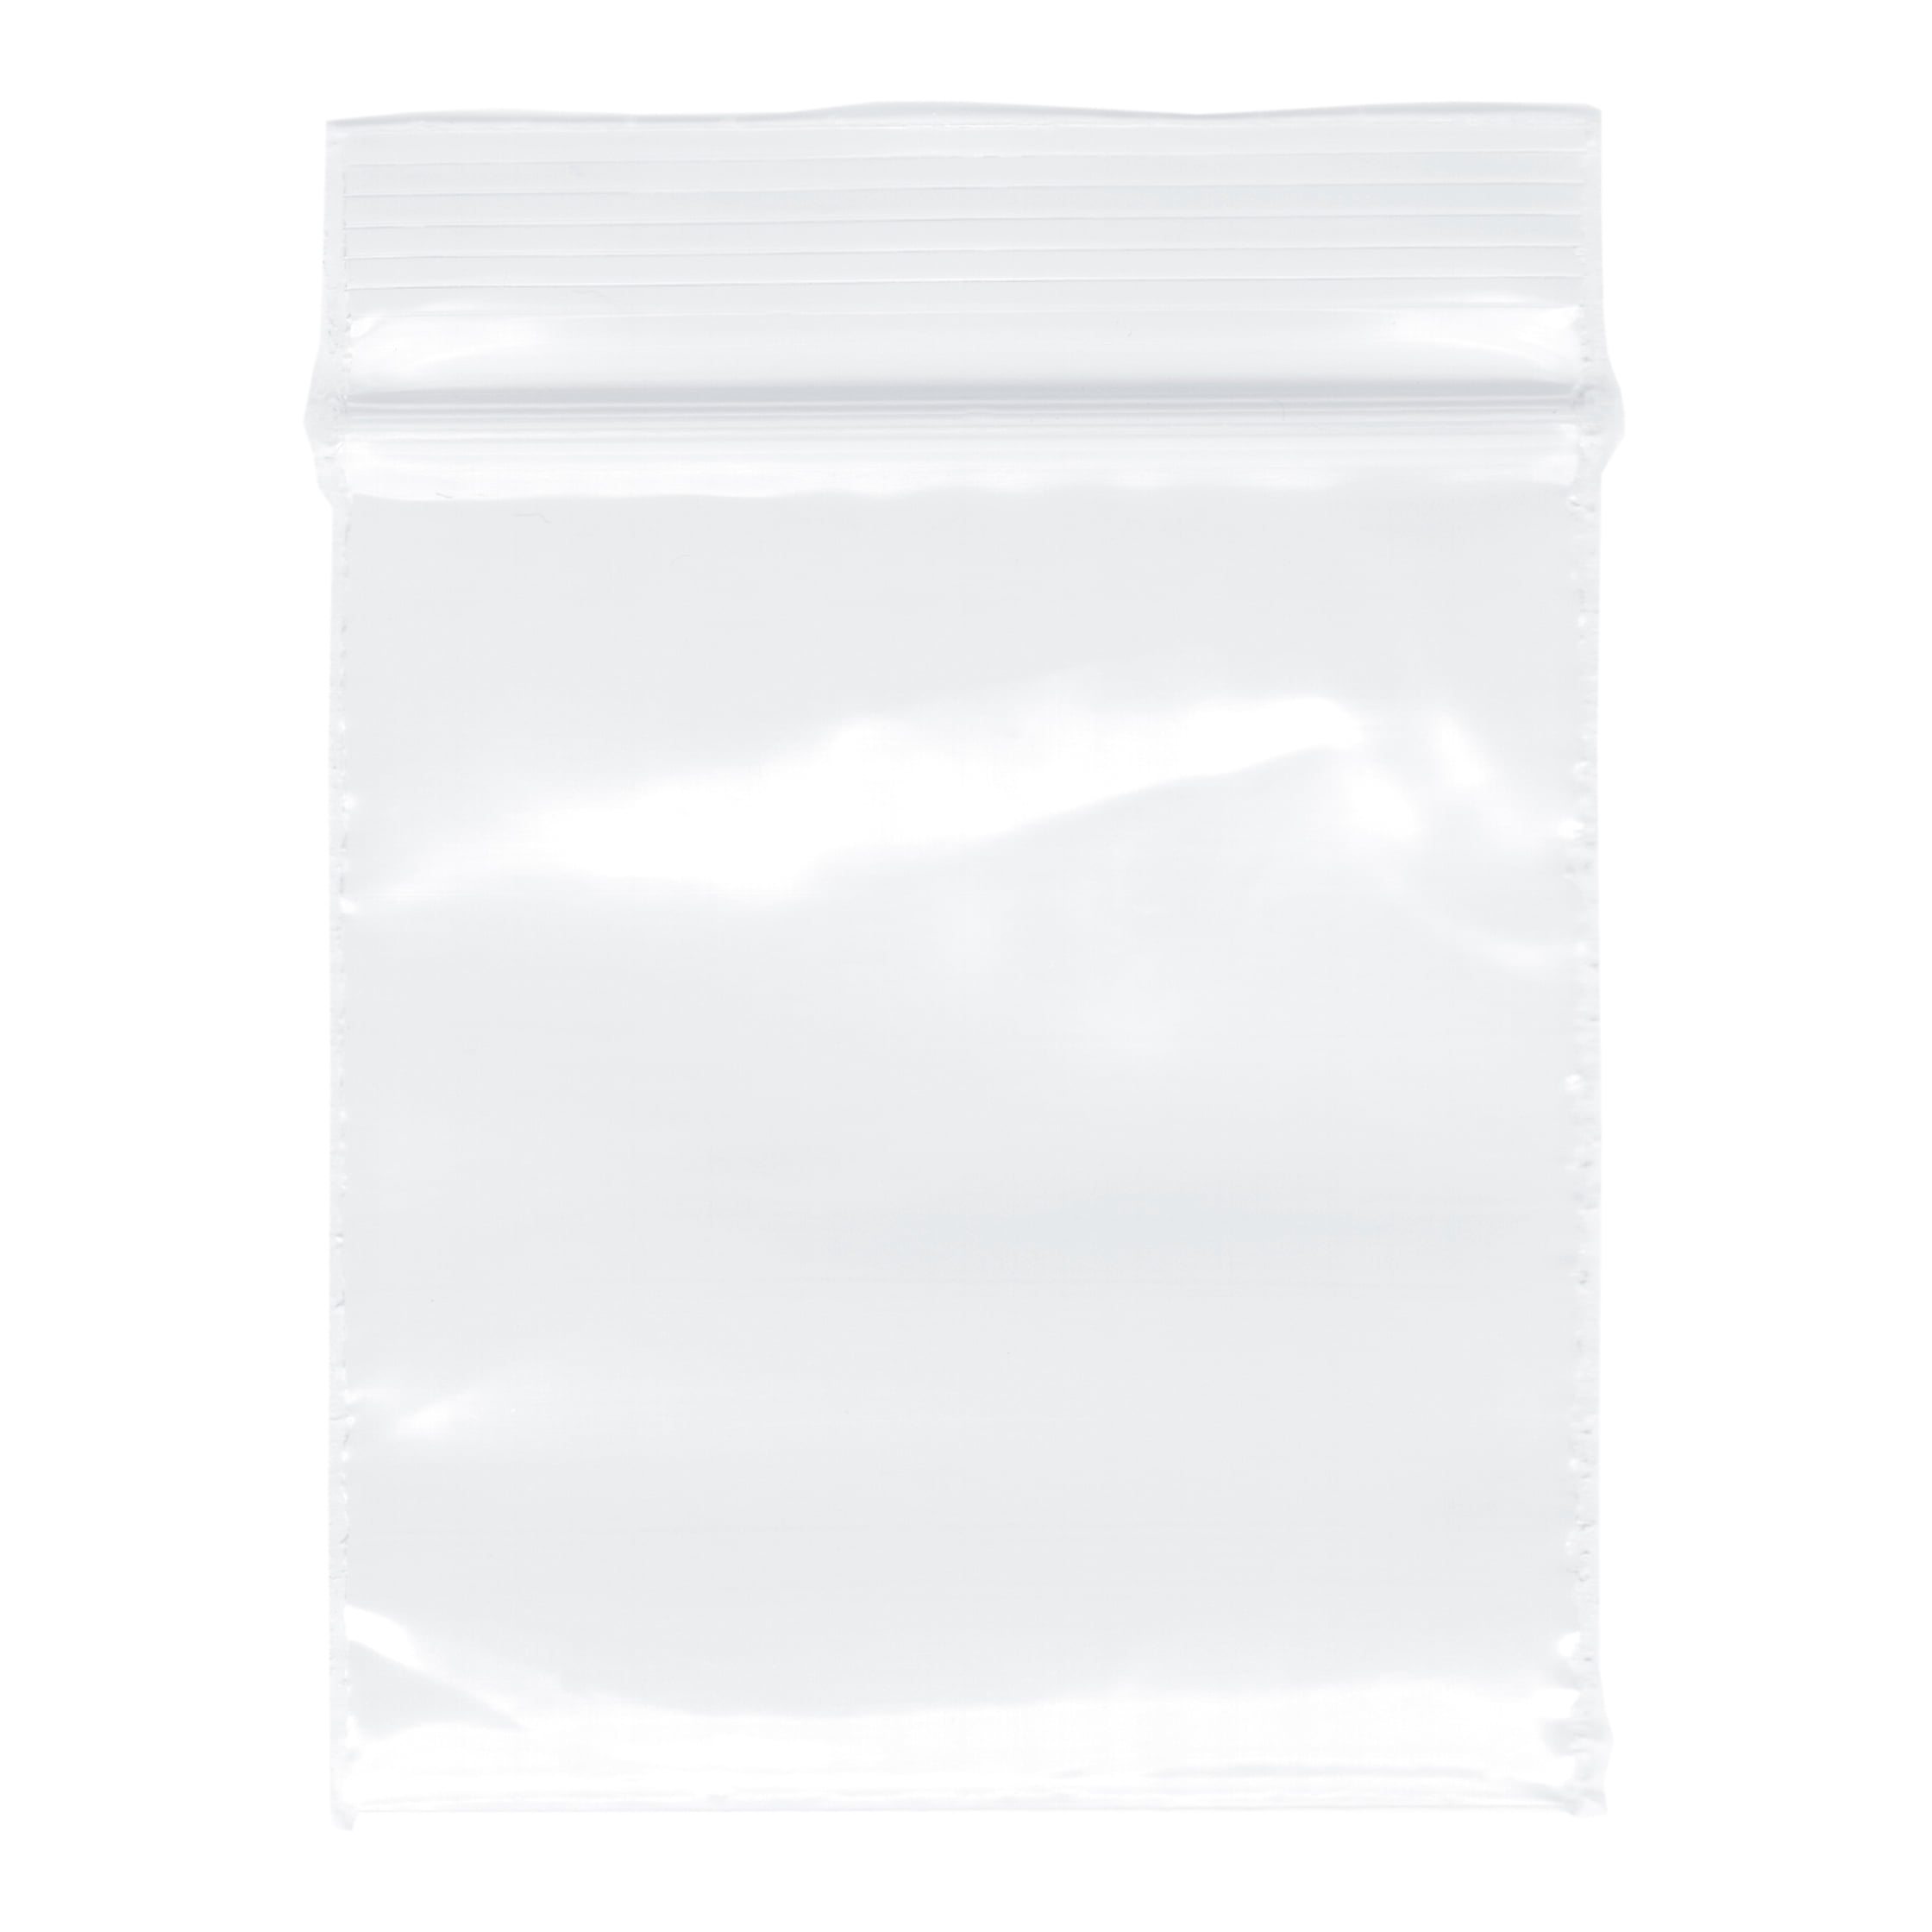 100 Clear Reclosable Plastic Bags Top Zip Lock Resealable Baggies 2 Mil 2"x12" 